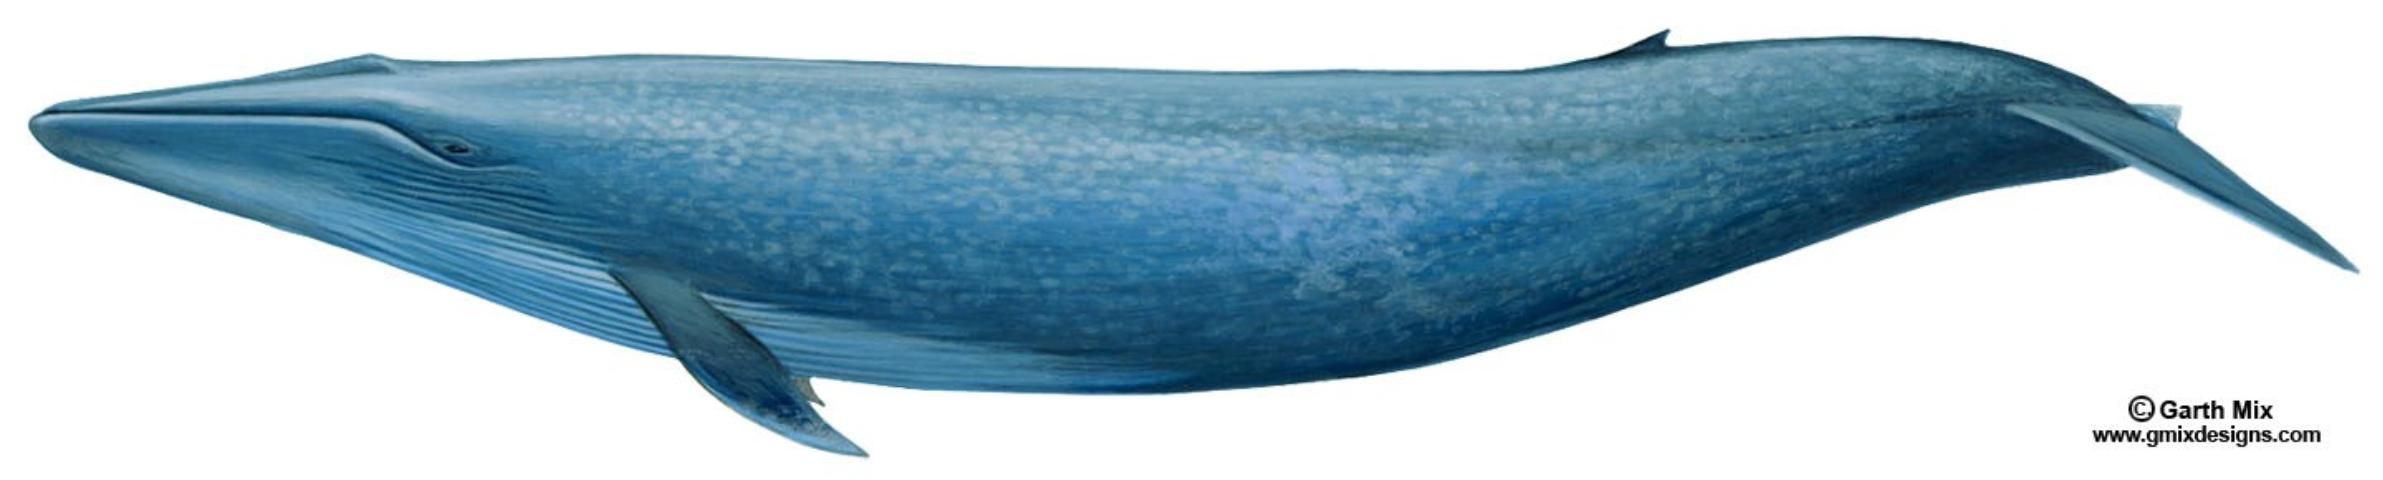 Figure 6. Blue whale Balaenoptera musculus